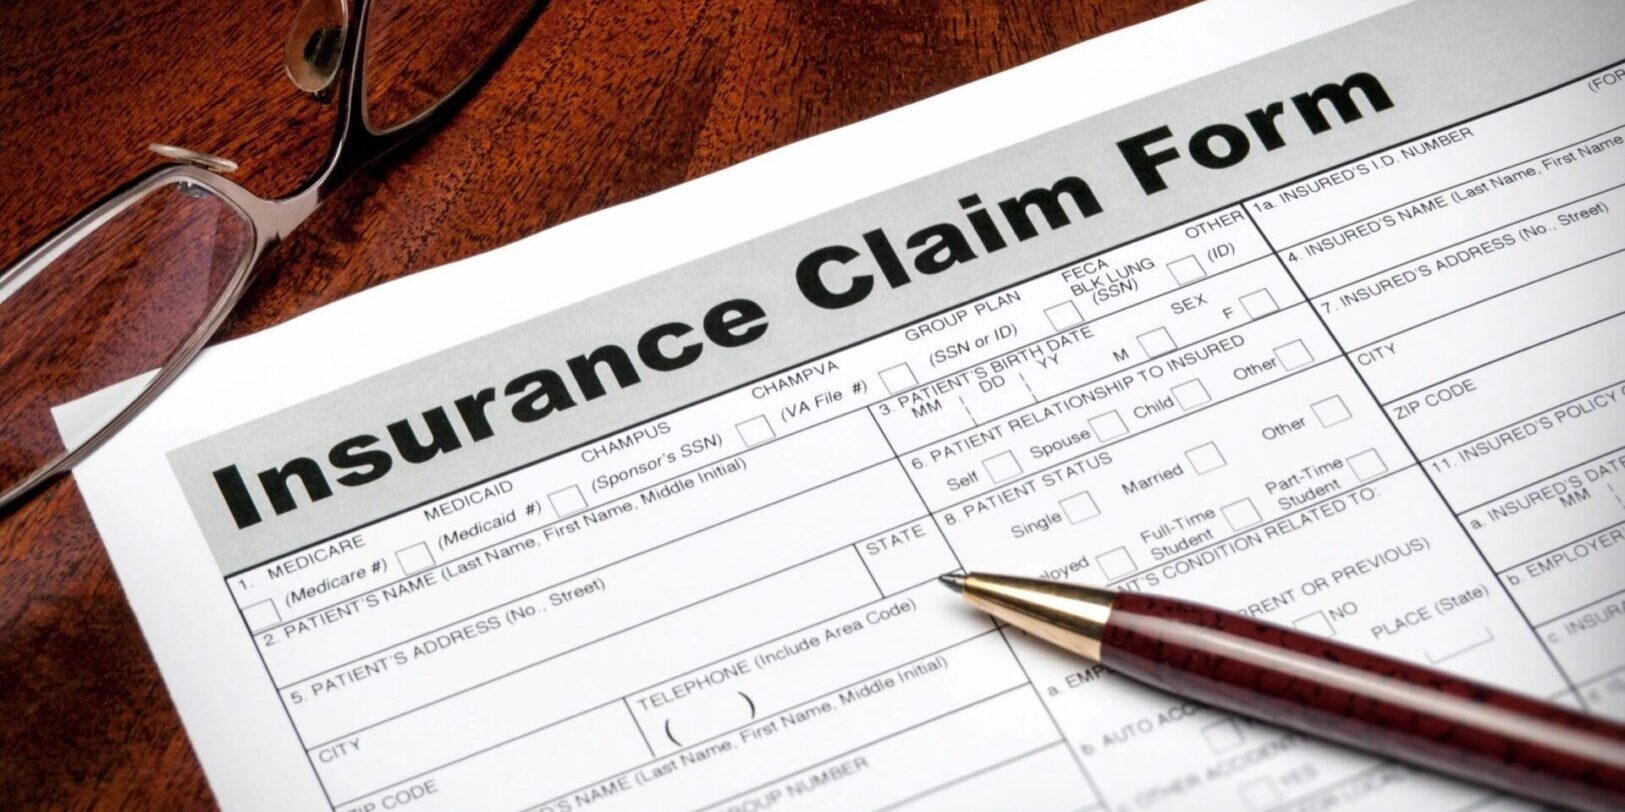 Insurance claim form graphic